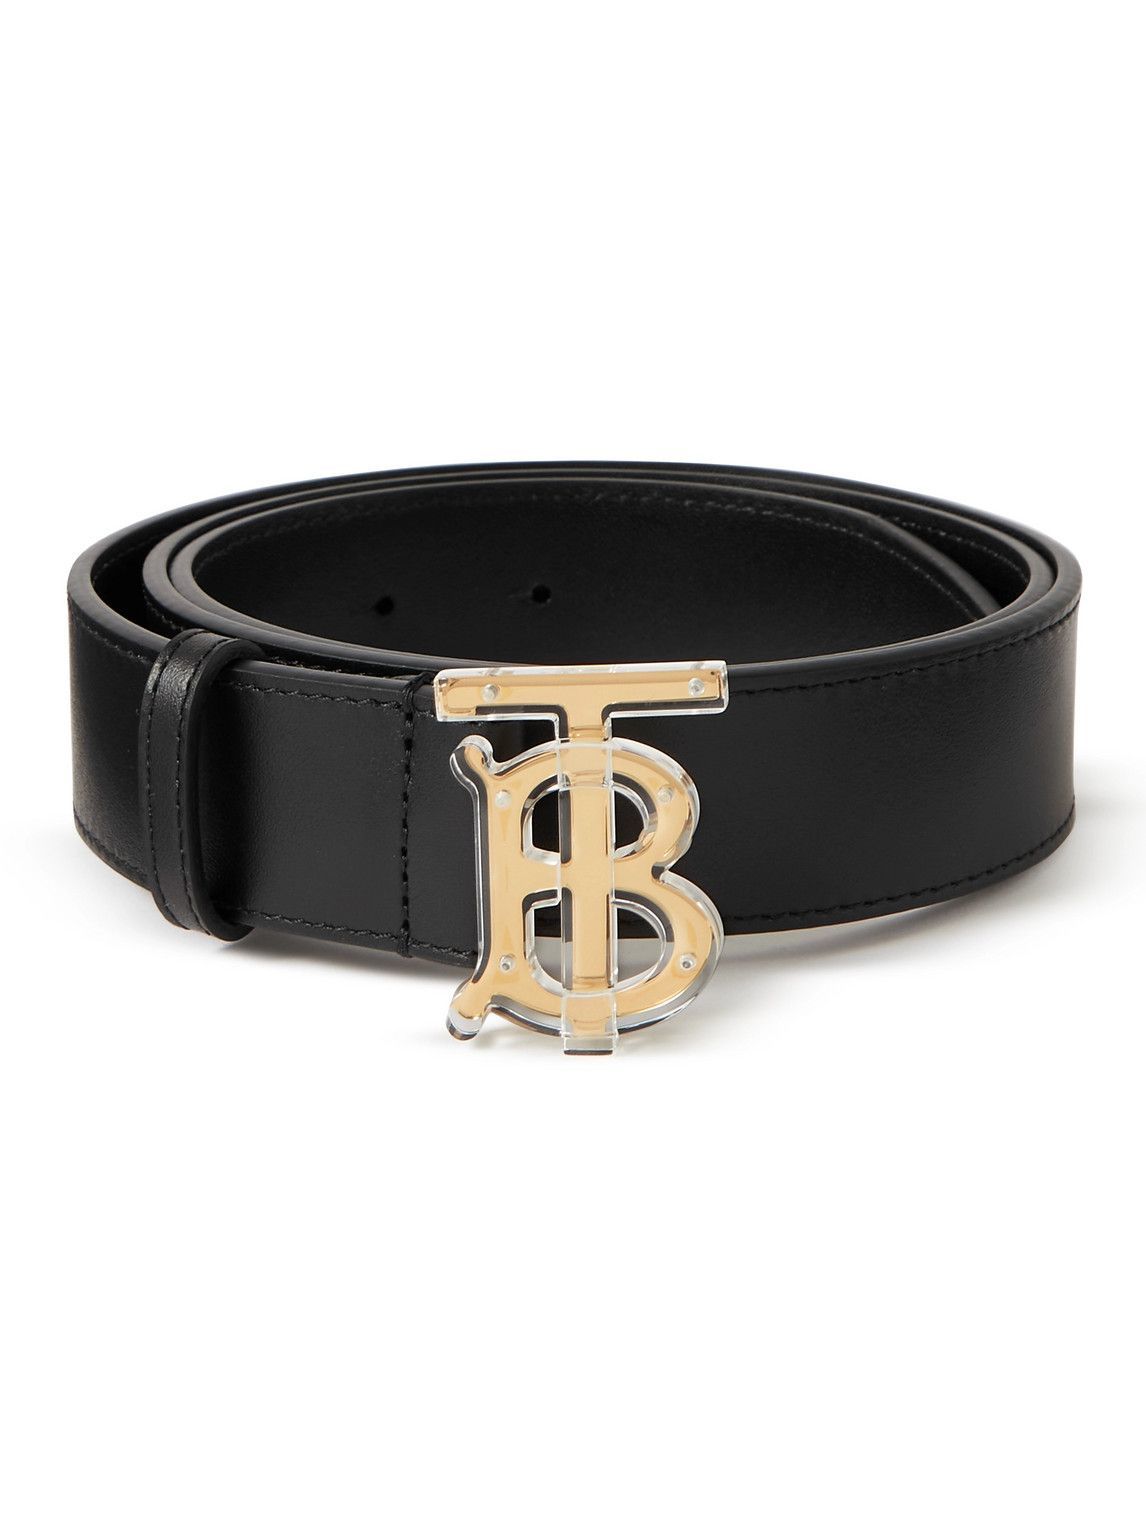 Burberry - 3.5cm Leather Belt - Black Burberry